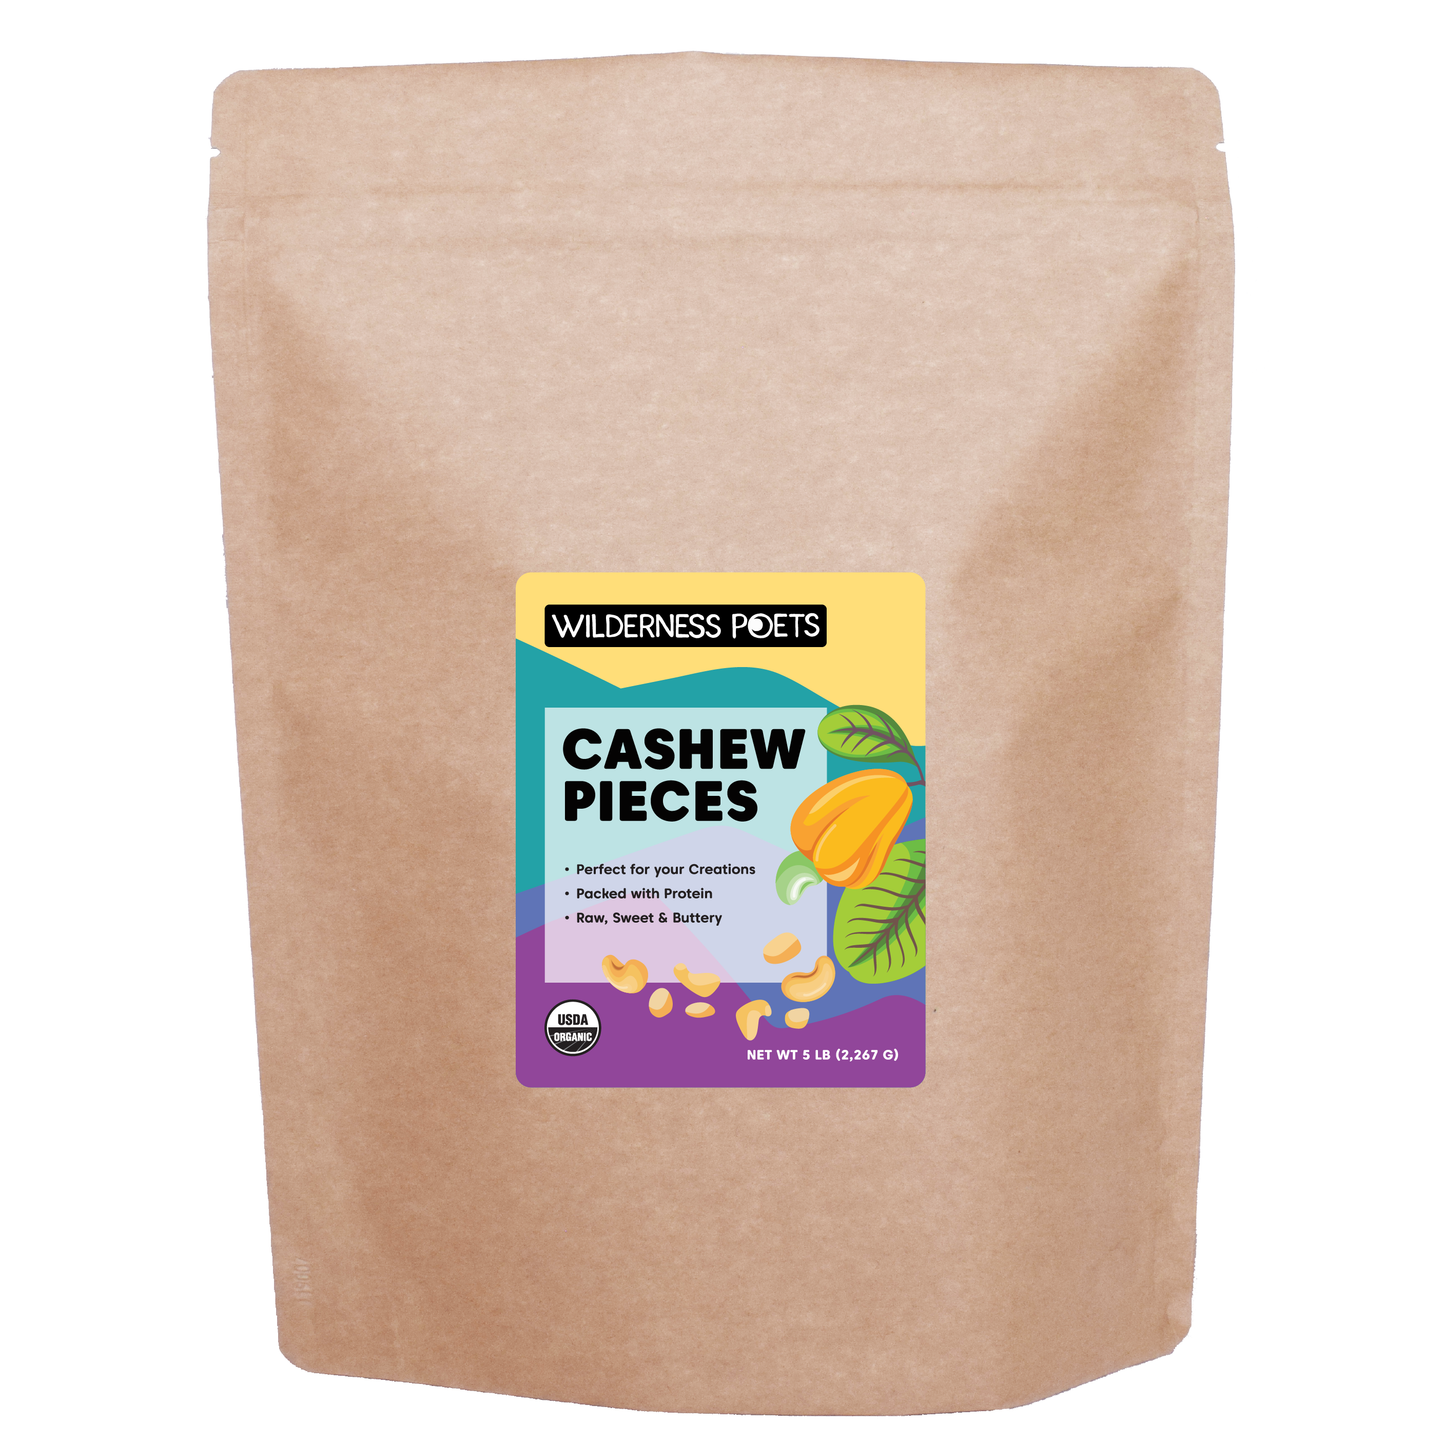 Cashew Pieces - Halves & Pieces, Organic